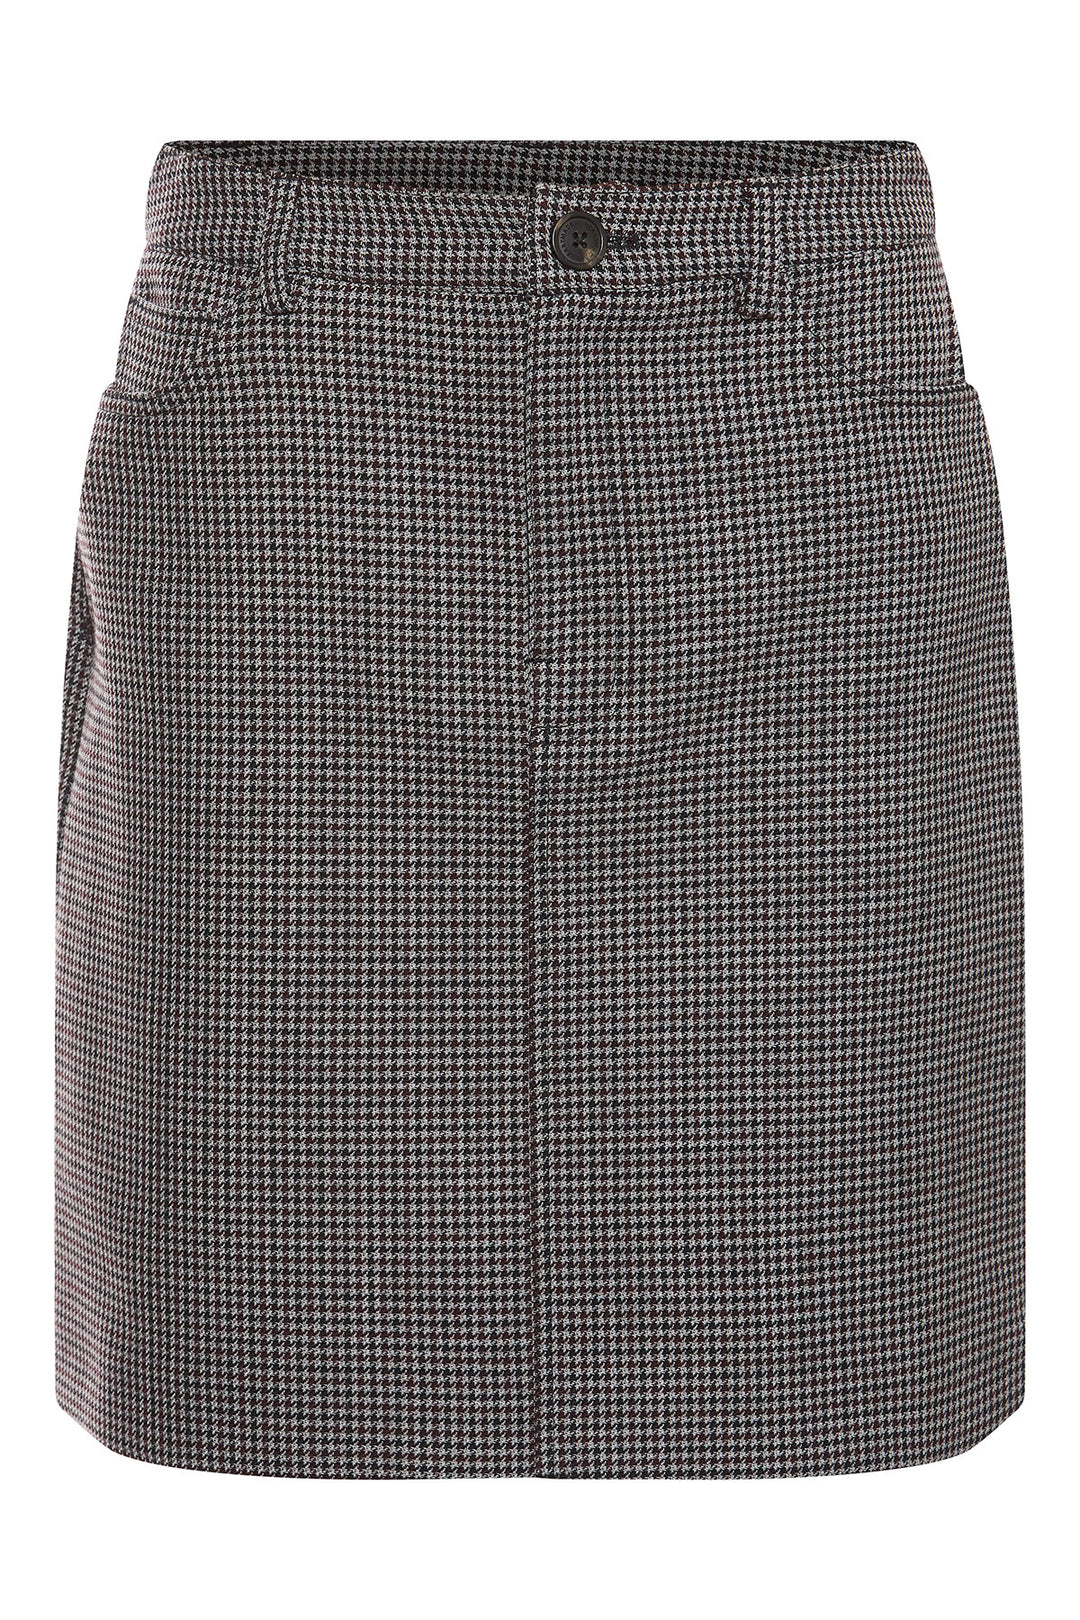 Heartmade Sica skirt HM SKIRTS 688 Grey check